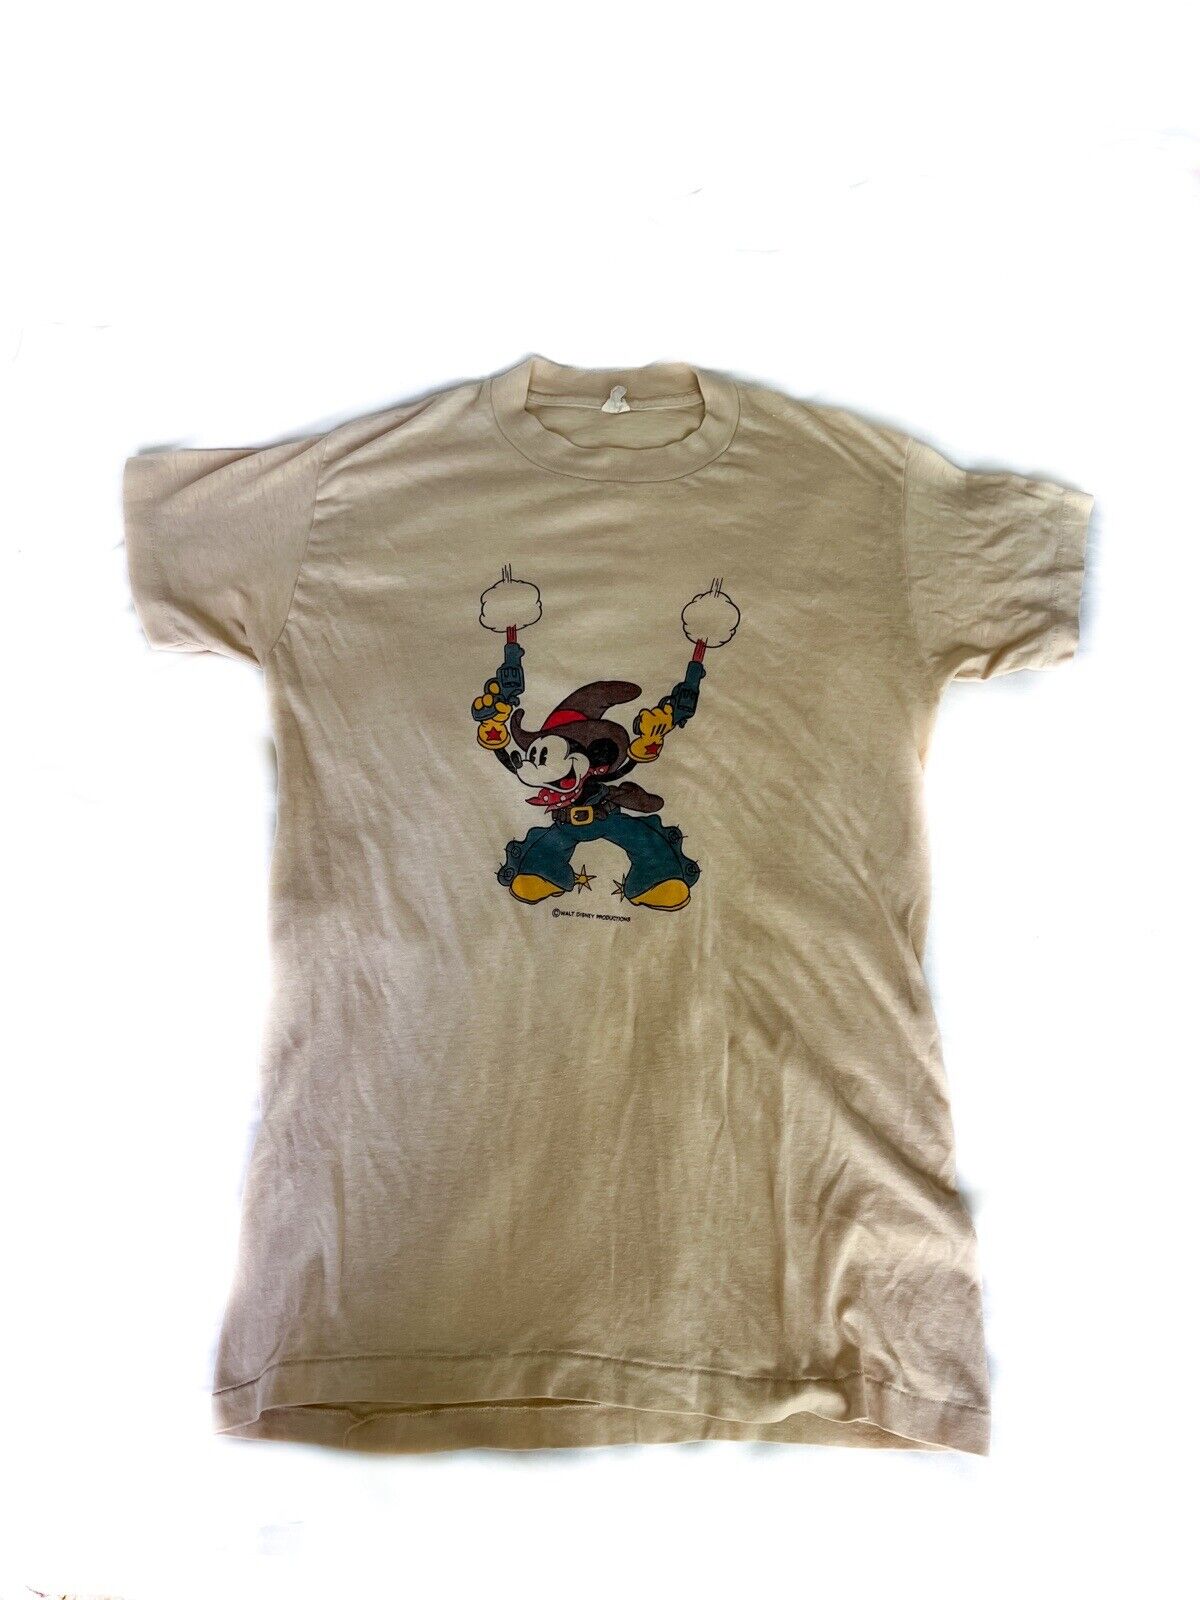 Vtg 80s HTF Small Medium Large Two Guns Western Cowboy Mickey Mouse Tee Shirt